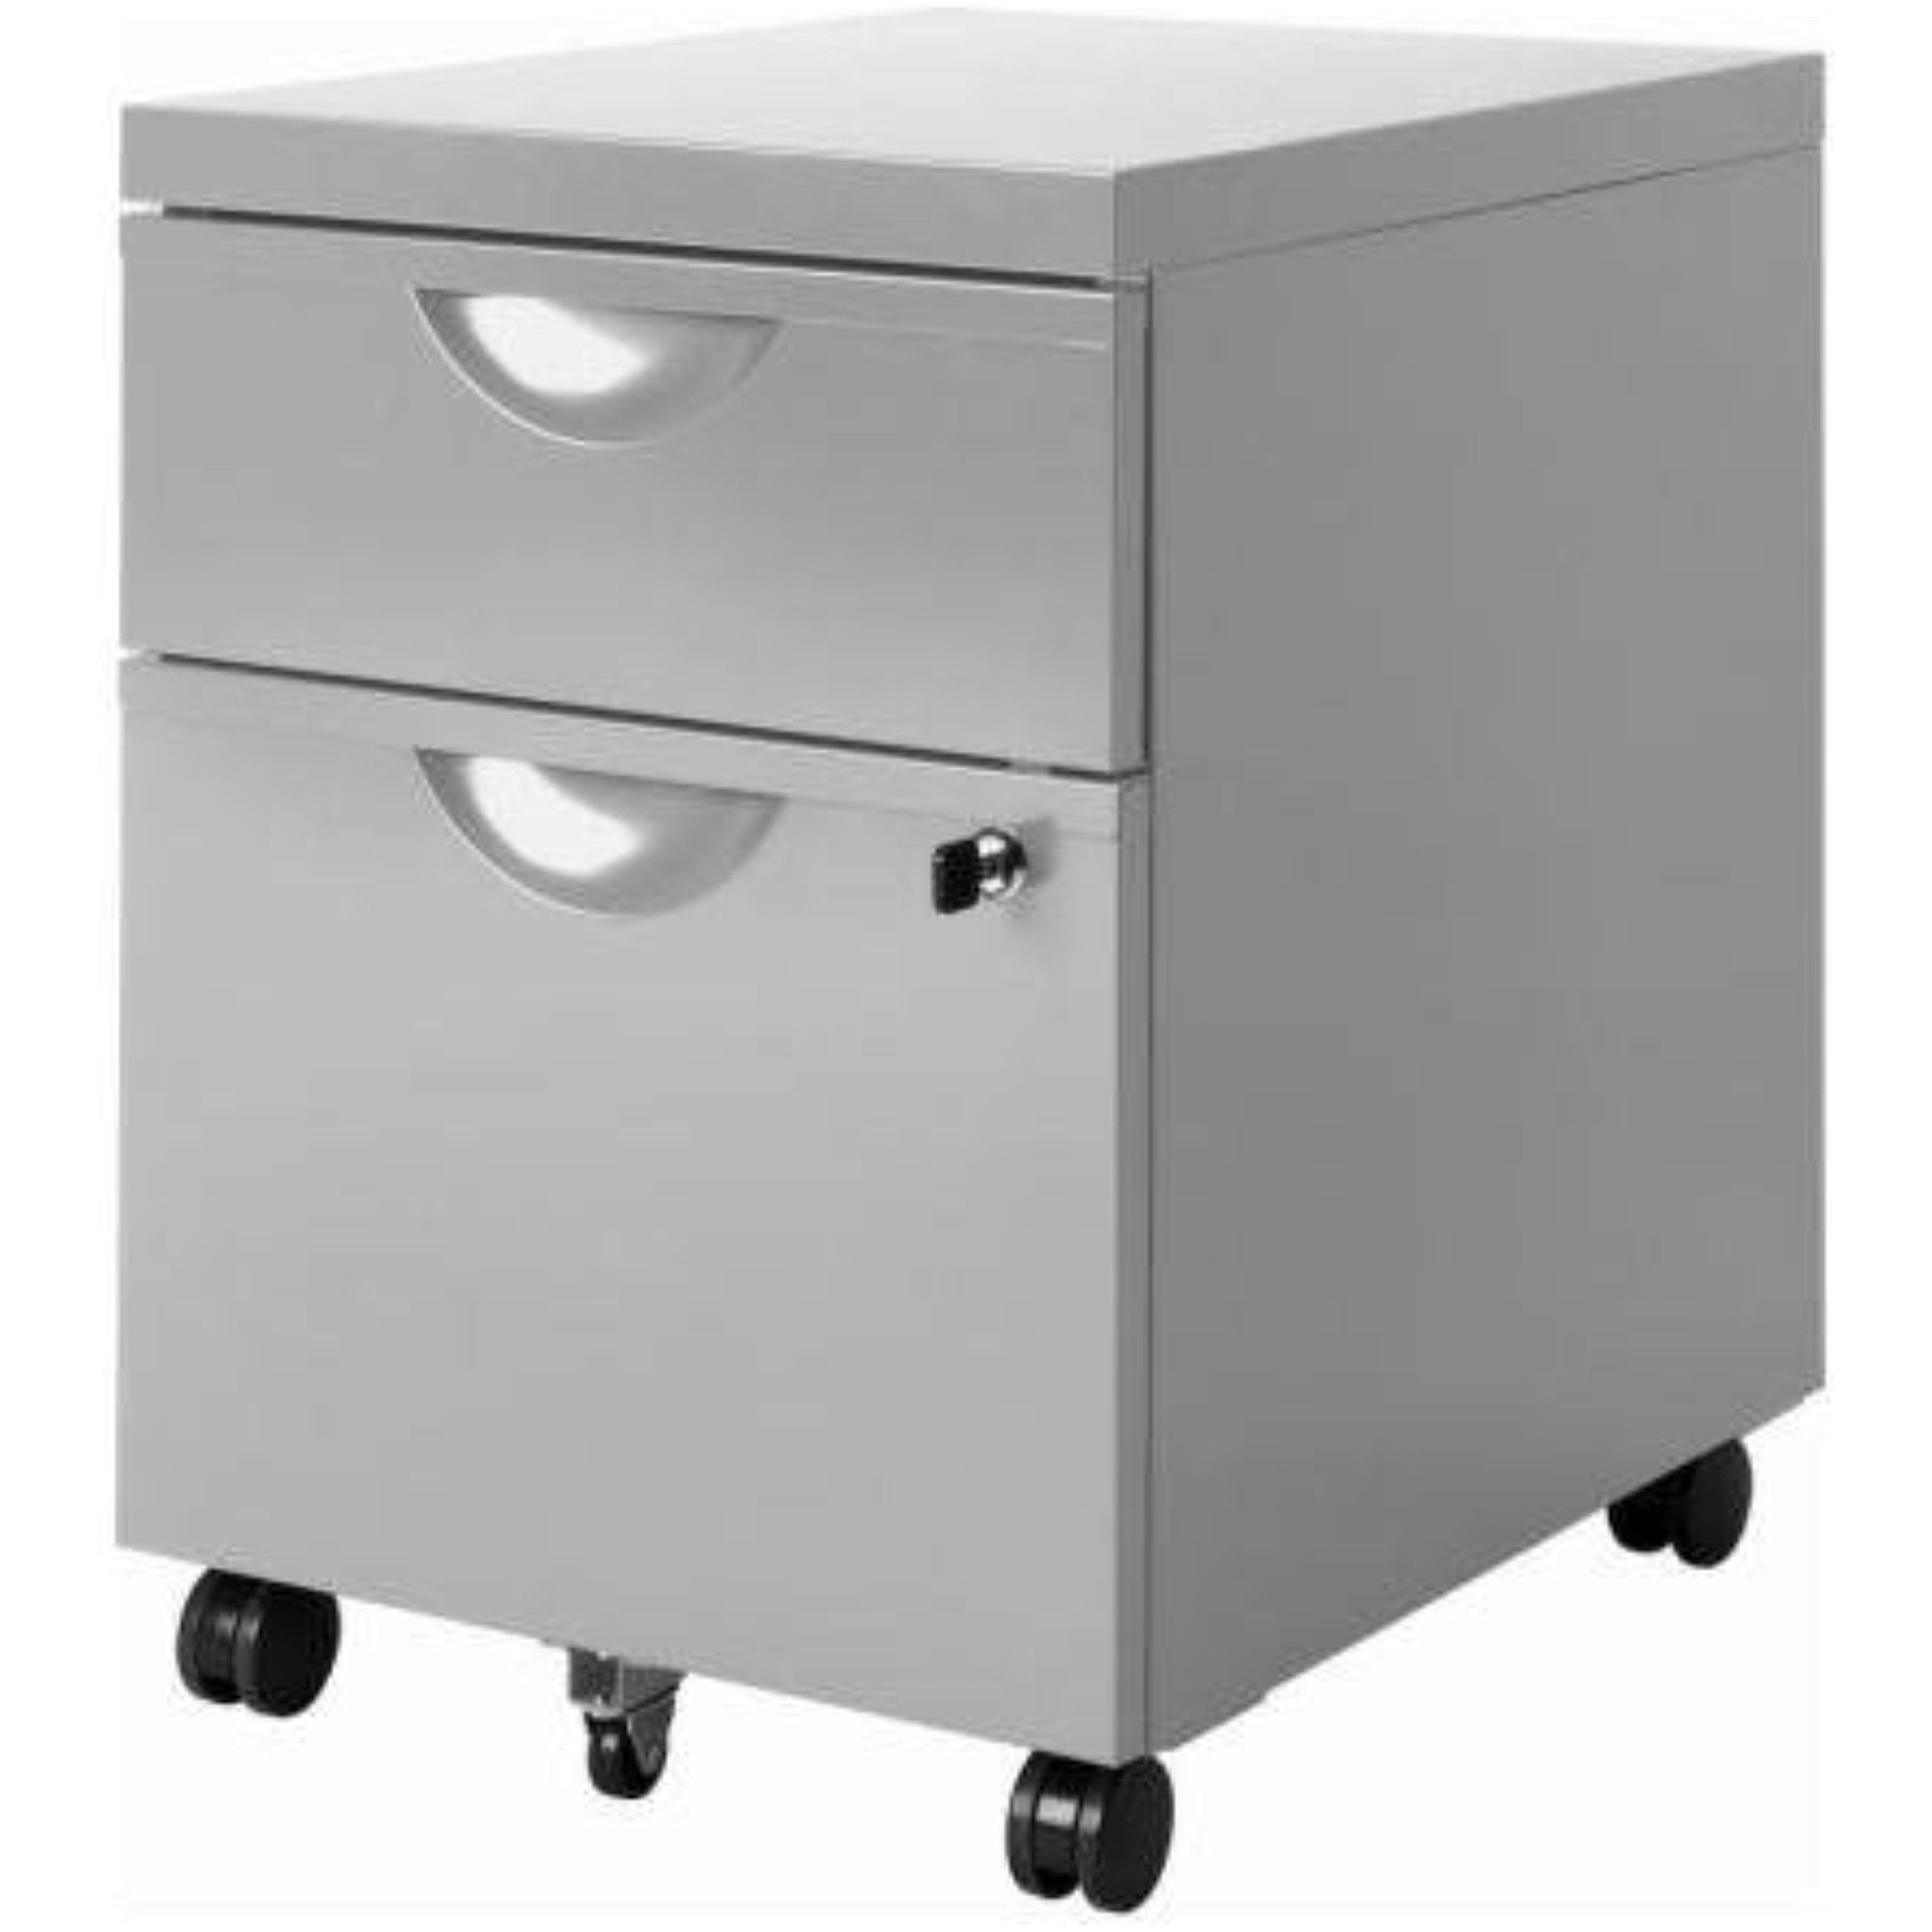 Ikea ERIK Metal Home Office Filing Drawer Unit on Castors Lock Cabinet,2colors 